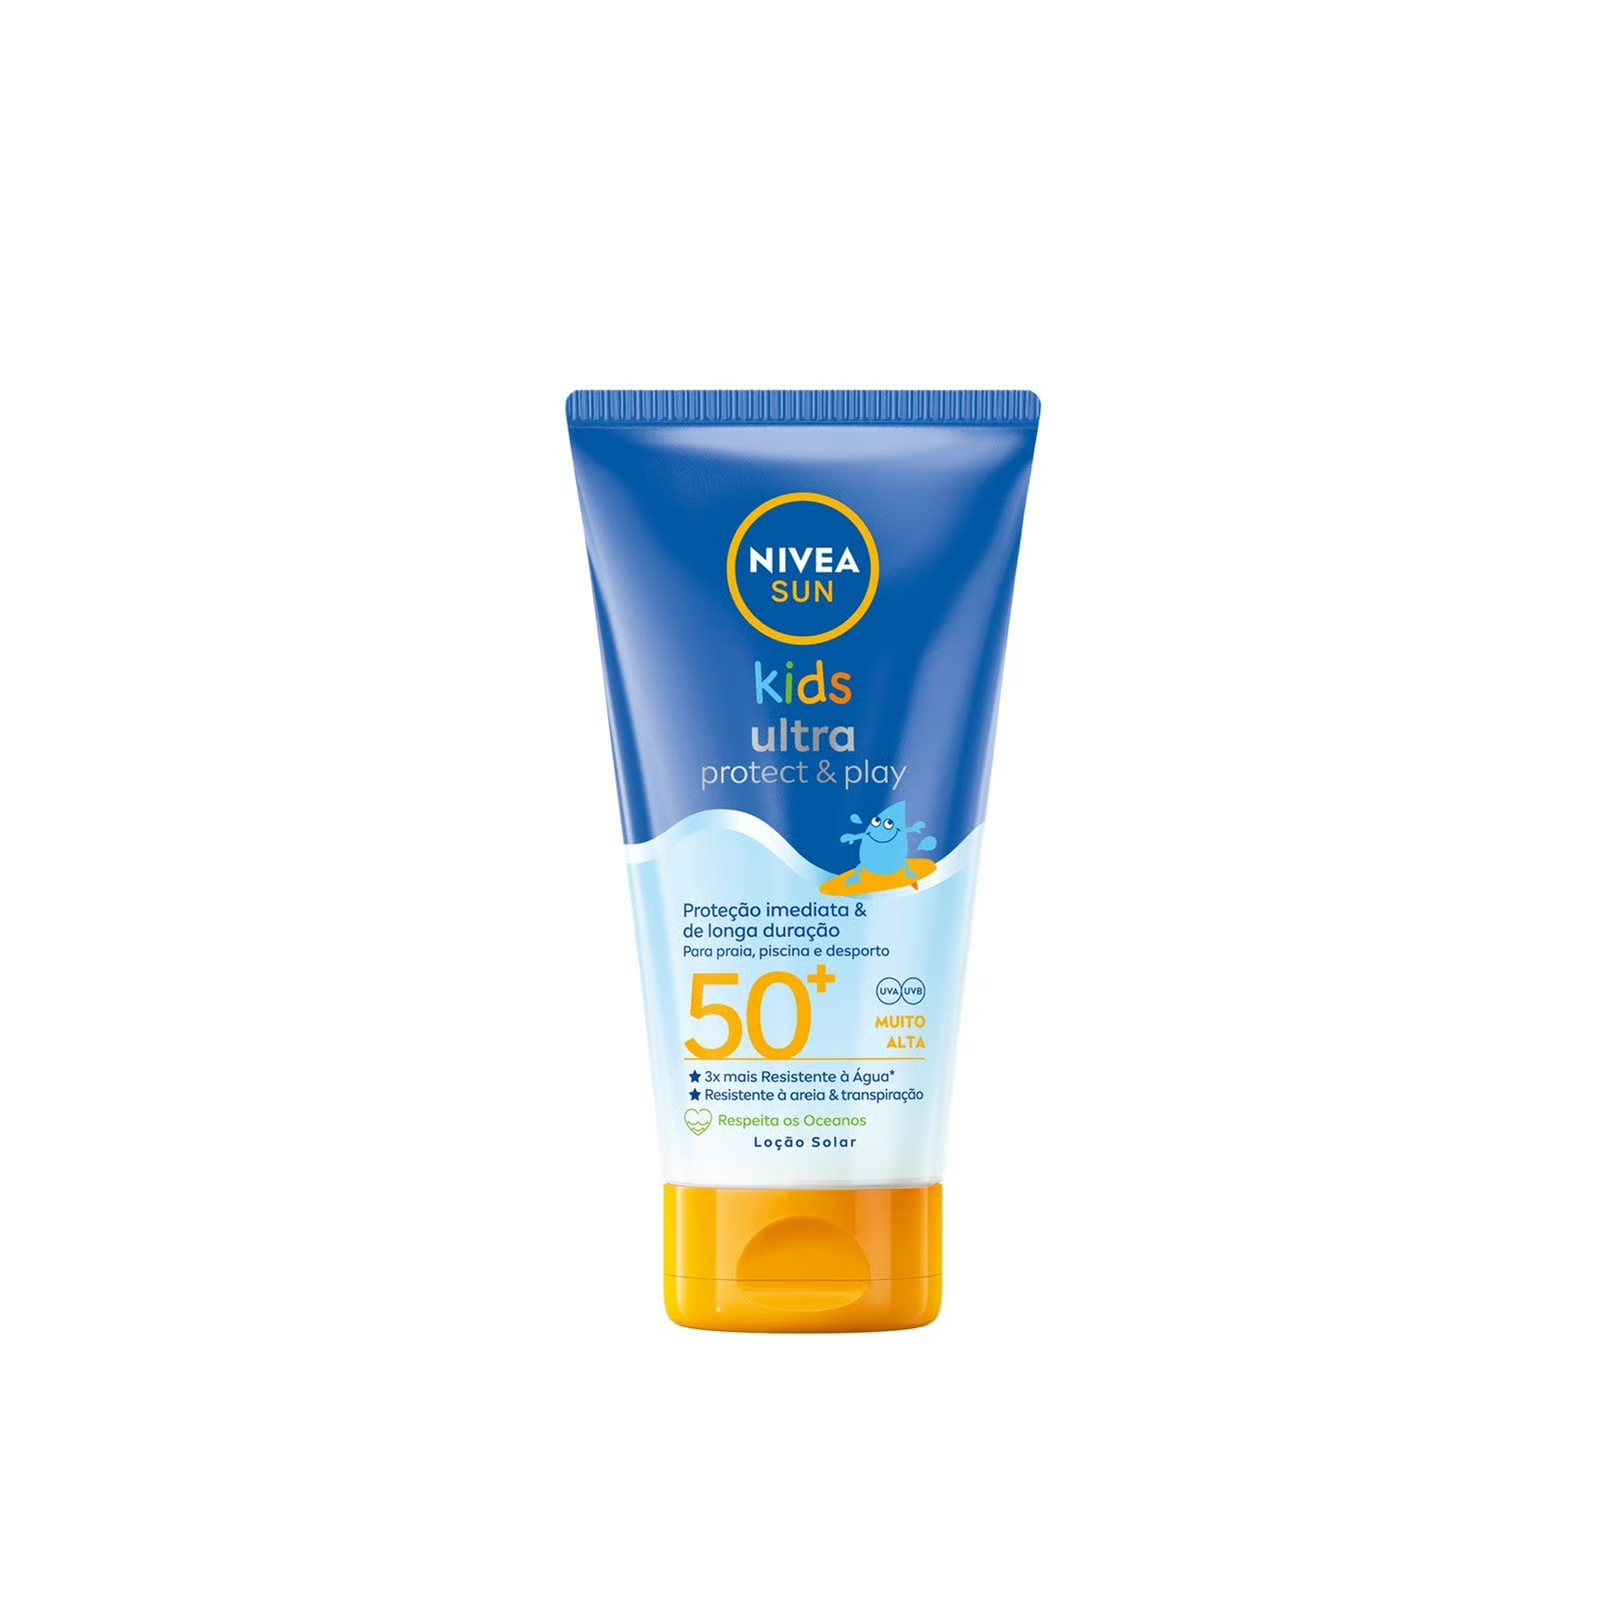 Nivea Sun Kids ULTRA Protect & Play Sunscreen SPF 50 - 150ml- Made in Germany - $25.73